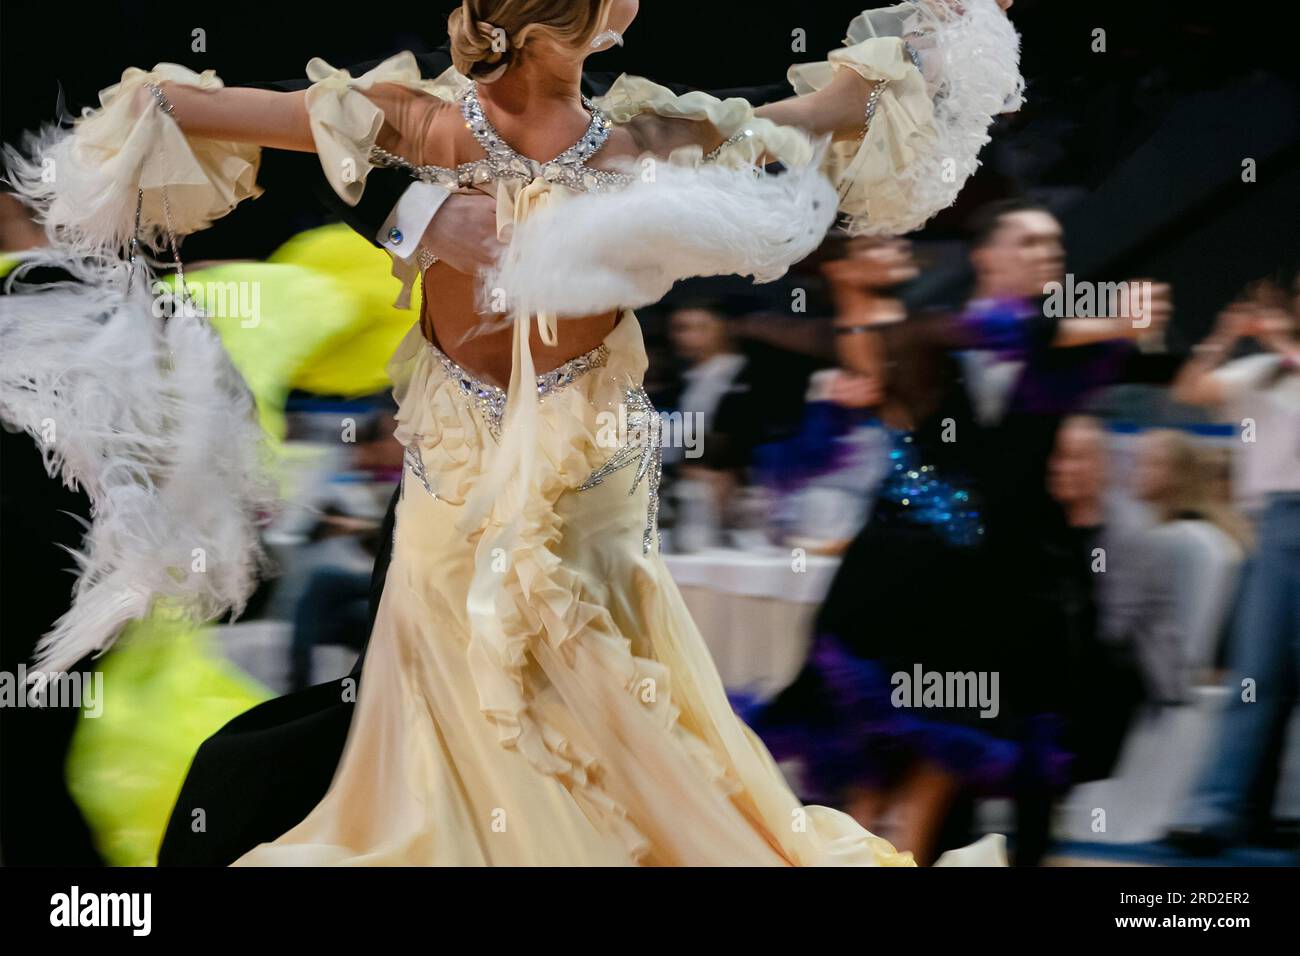 competition ballroom dancing rear view women dancer in cream dress, viennese waltz dance Stock Photo